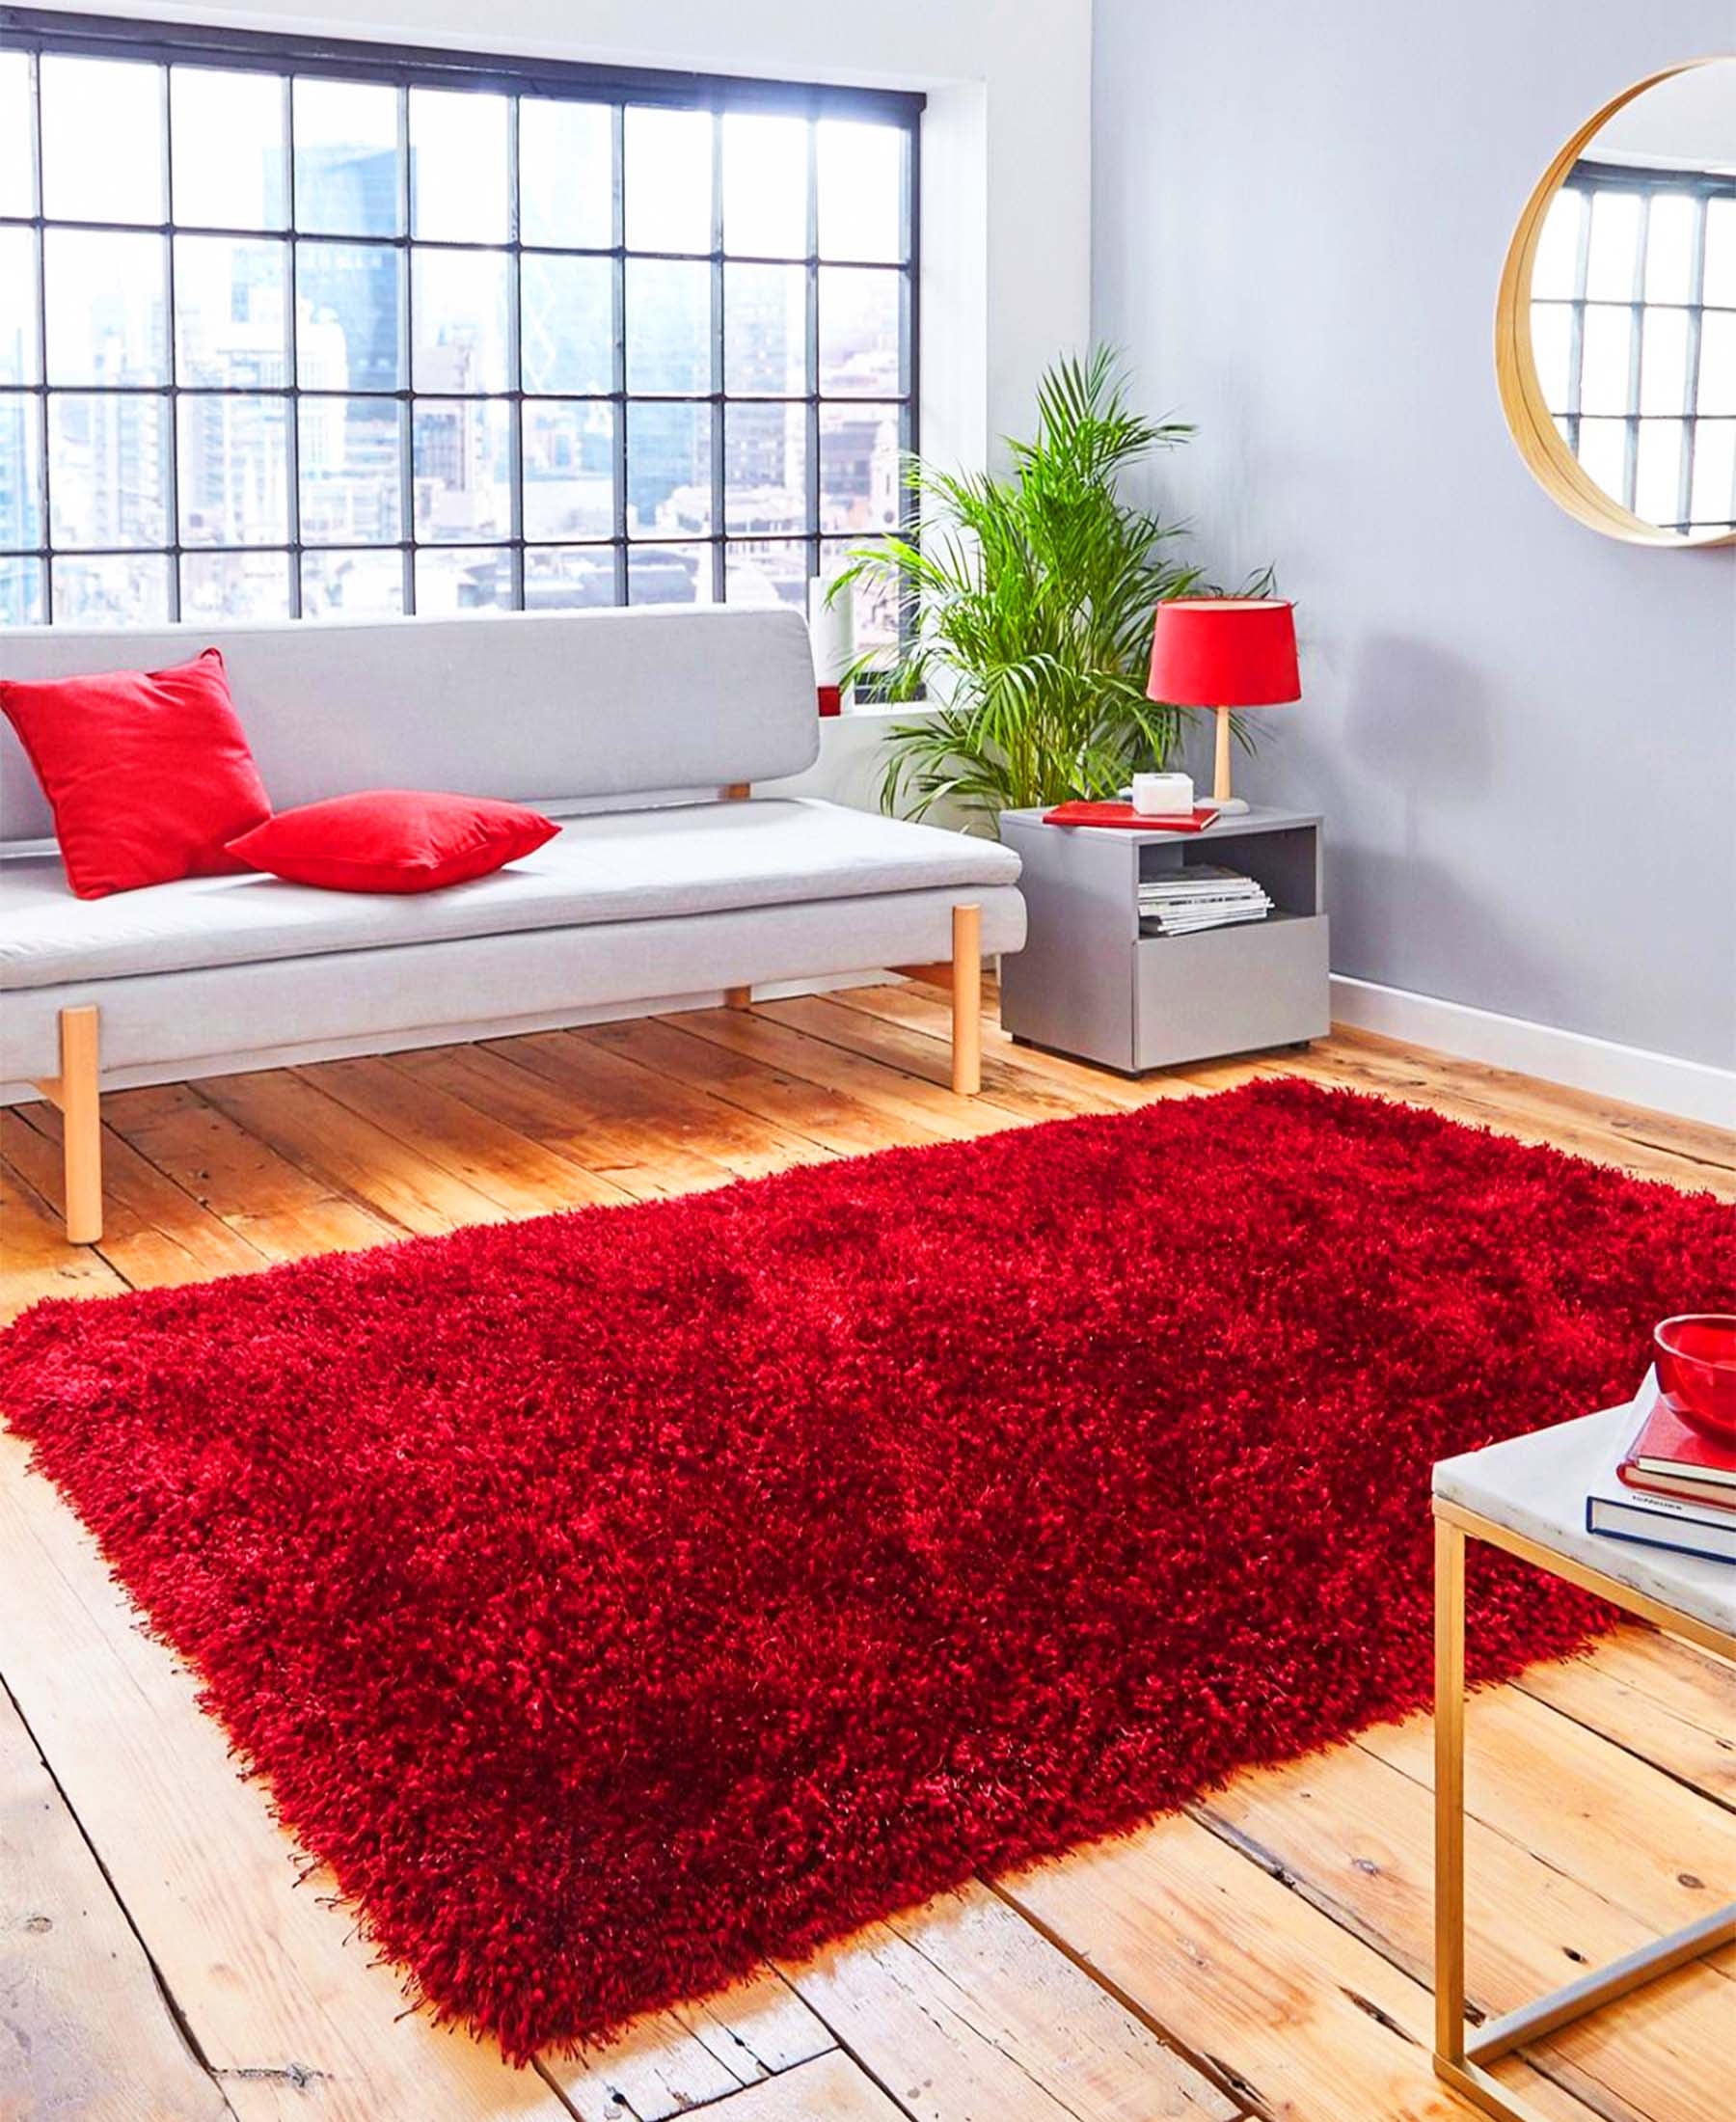 Shaggy Carpet 1500mm x 2000mm - Red